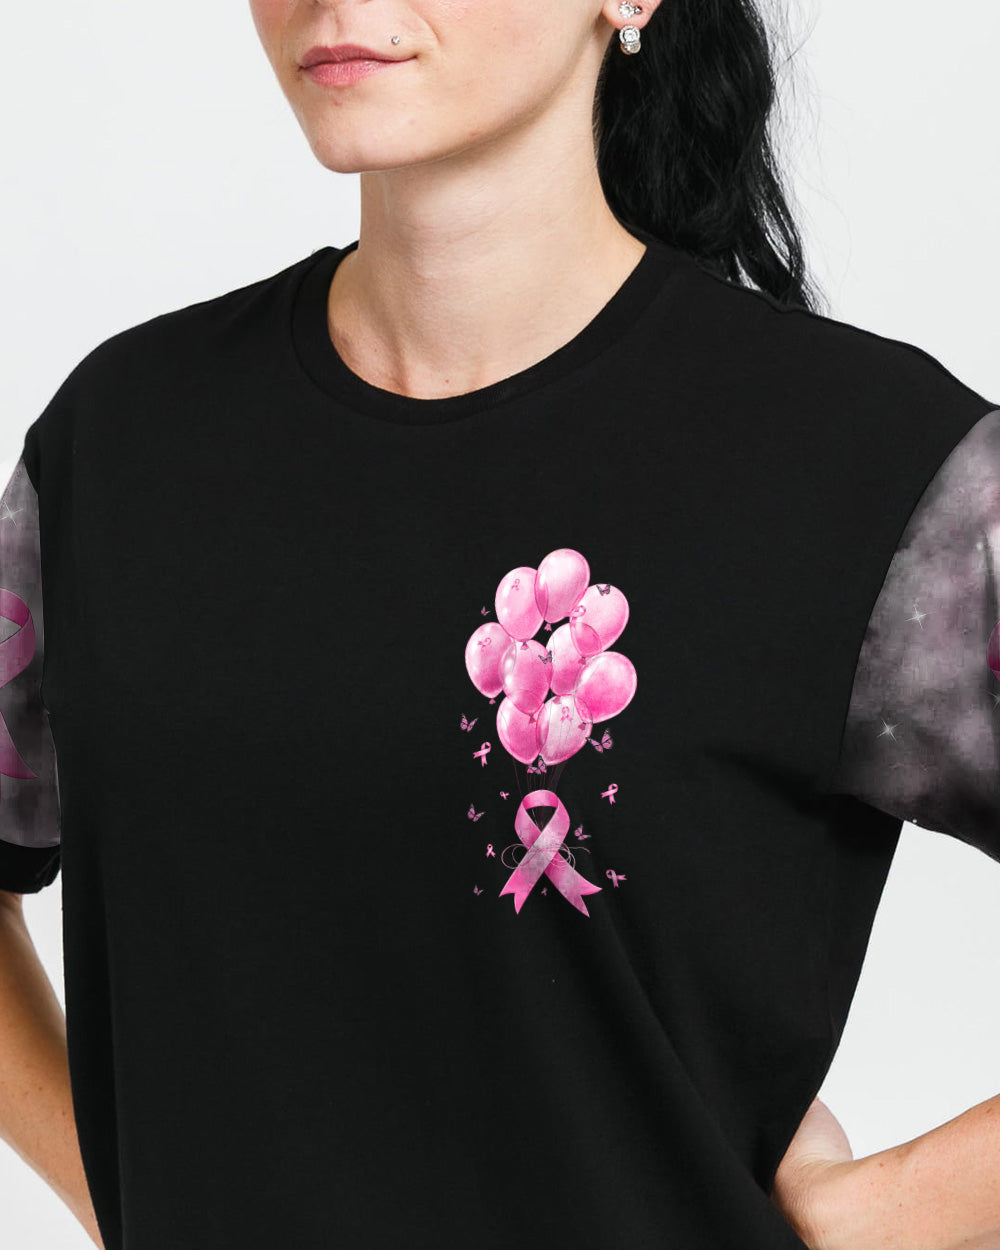 Pink Balloon Ribbon Butterfly Women's Breast Cancer Awareness Tshirt